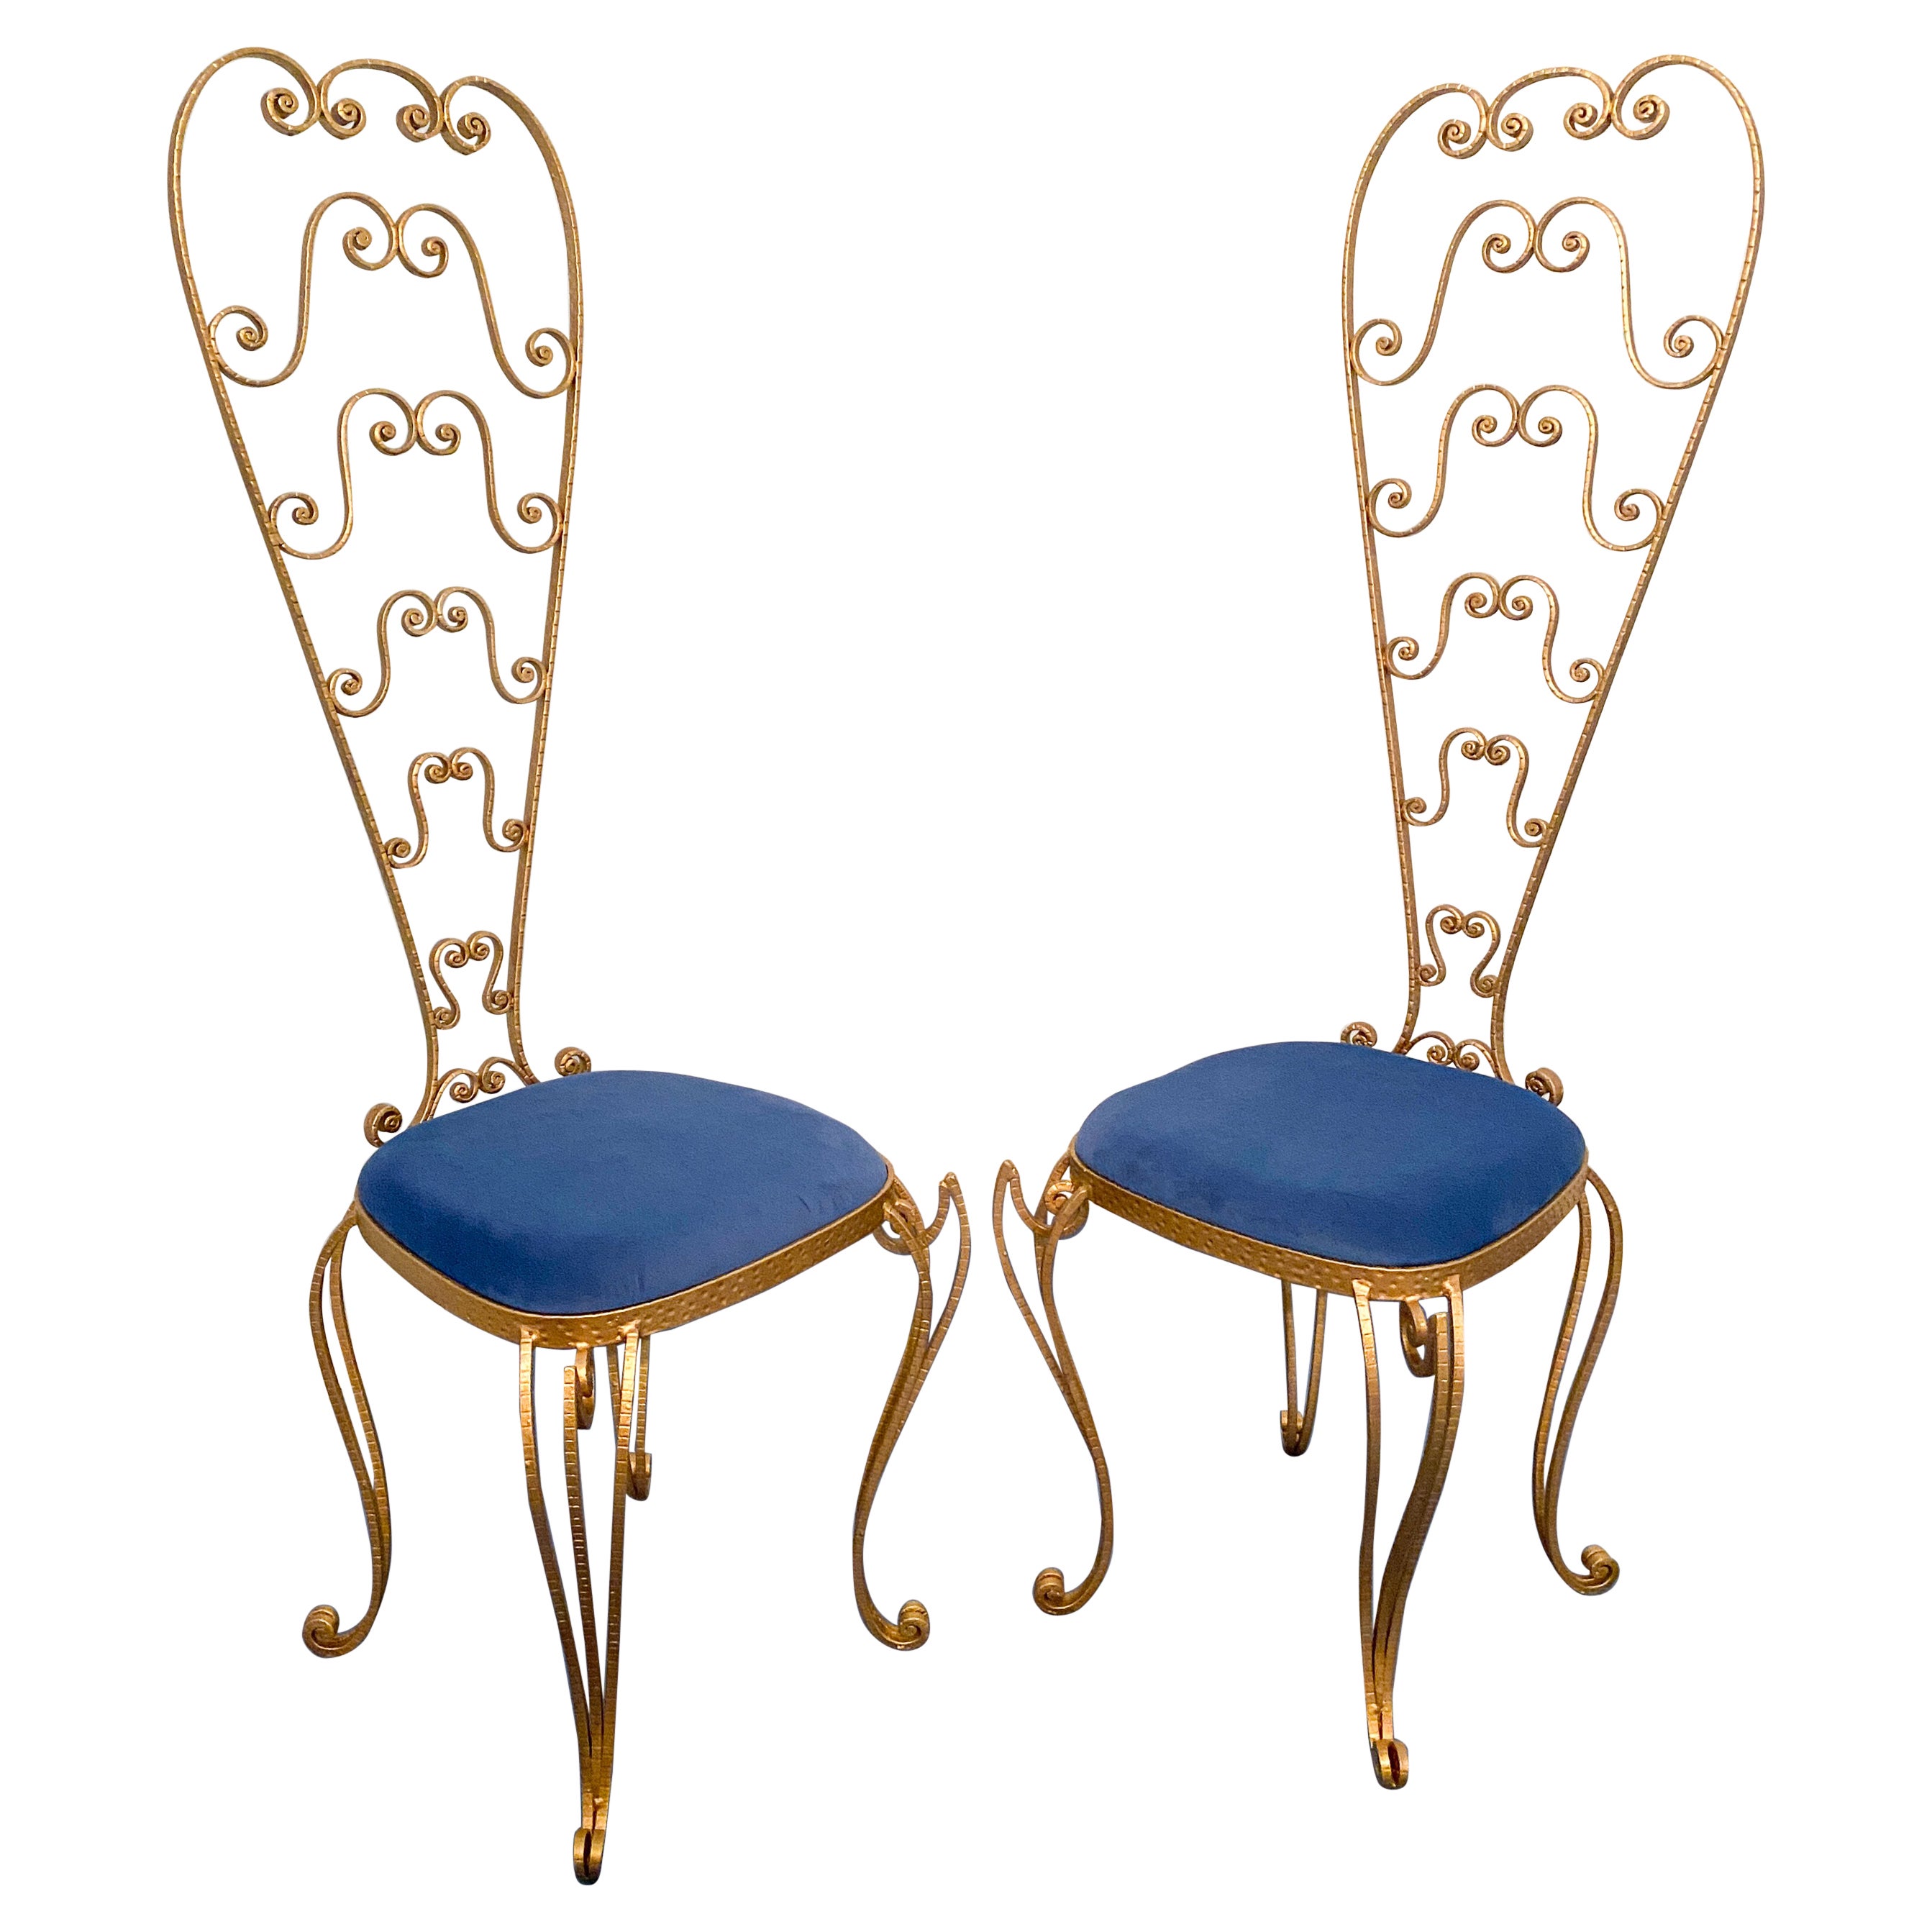 Pair of Italian Mid-Century Modern Luigi Colli Gold Iron Vanity Chairs, 1950s For Sale